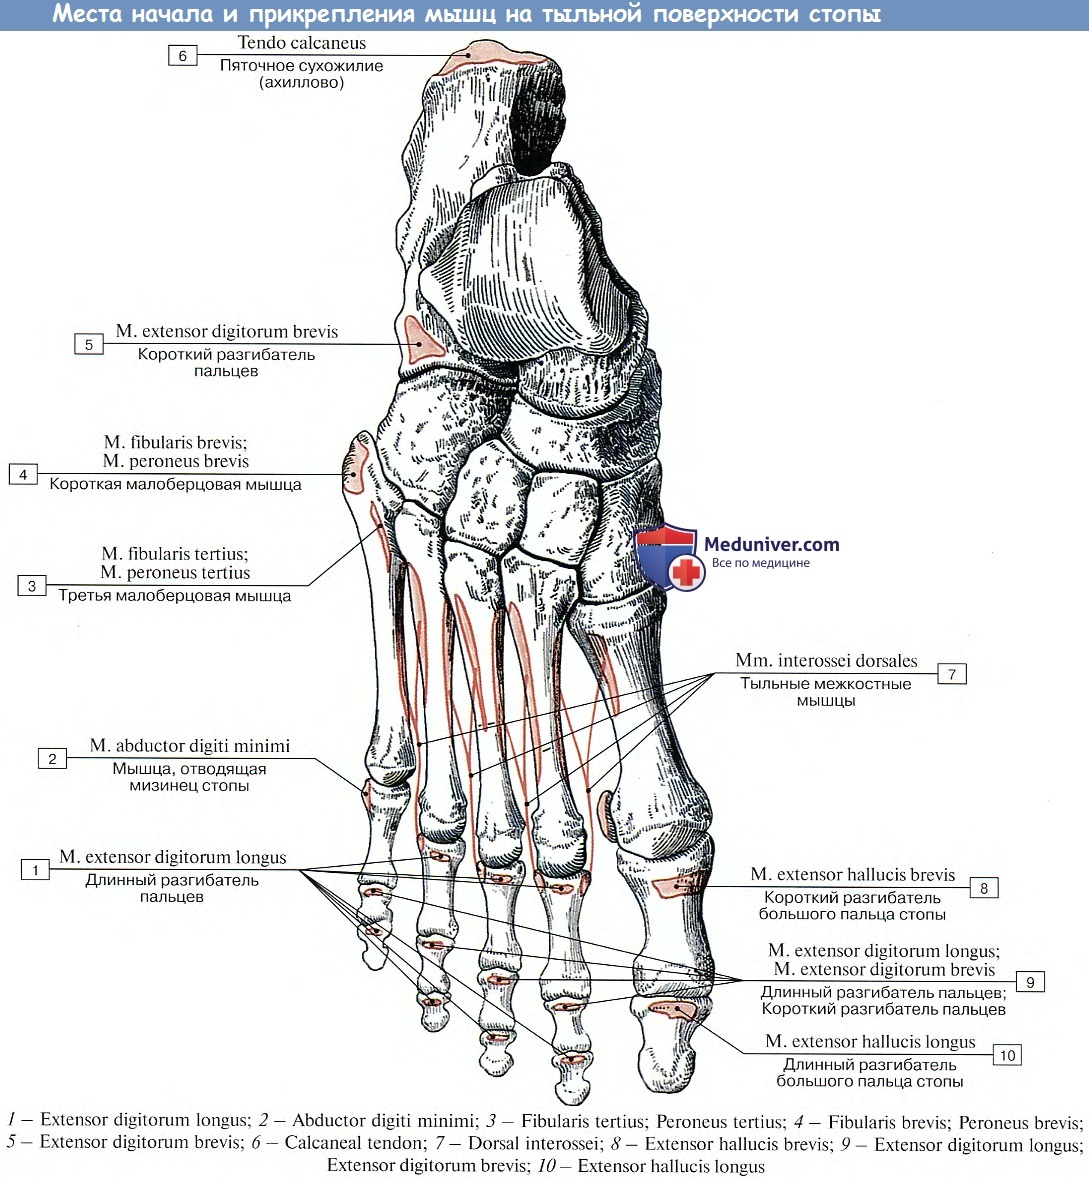 Ступня анатомия. Стопа кость строение анатомия. Анатомическое строение стопы кости. Кости стопы строение анатомия на латыни. Строение стопы анатомия латынь.